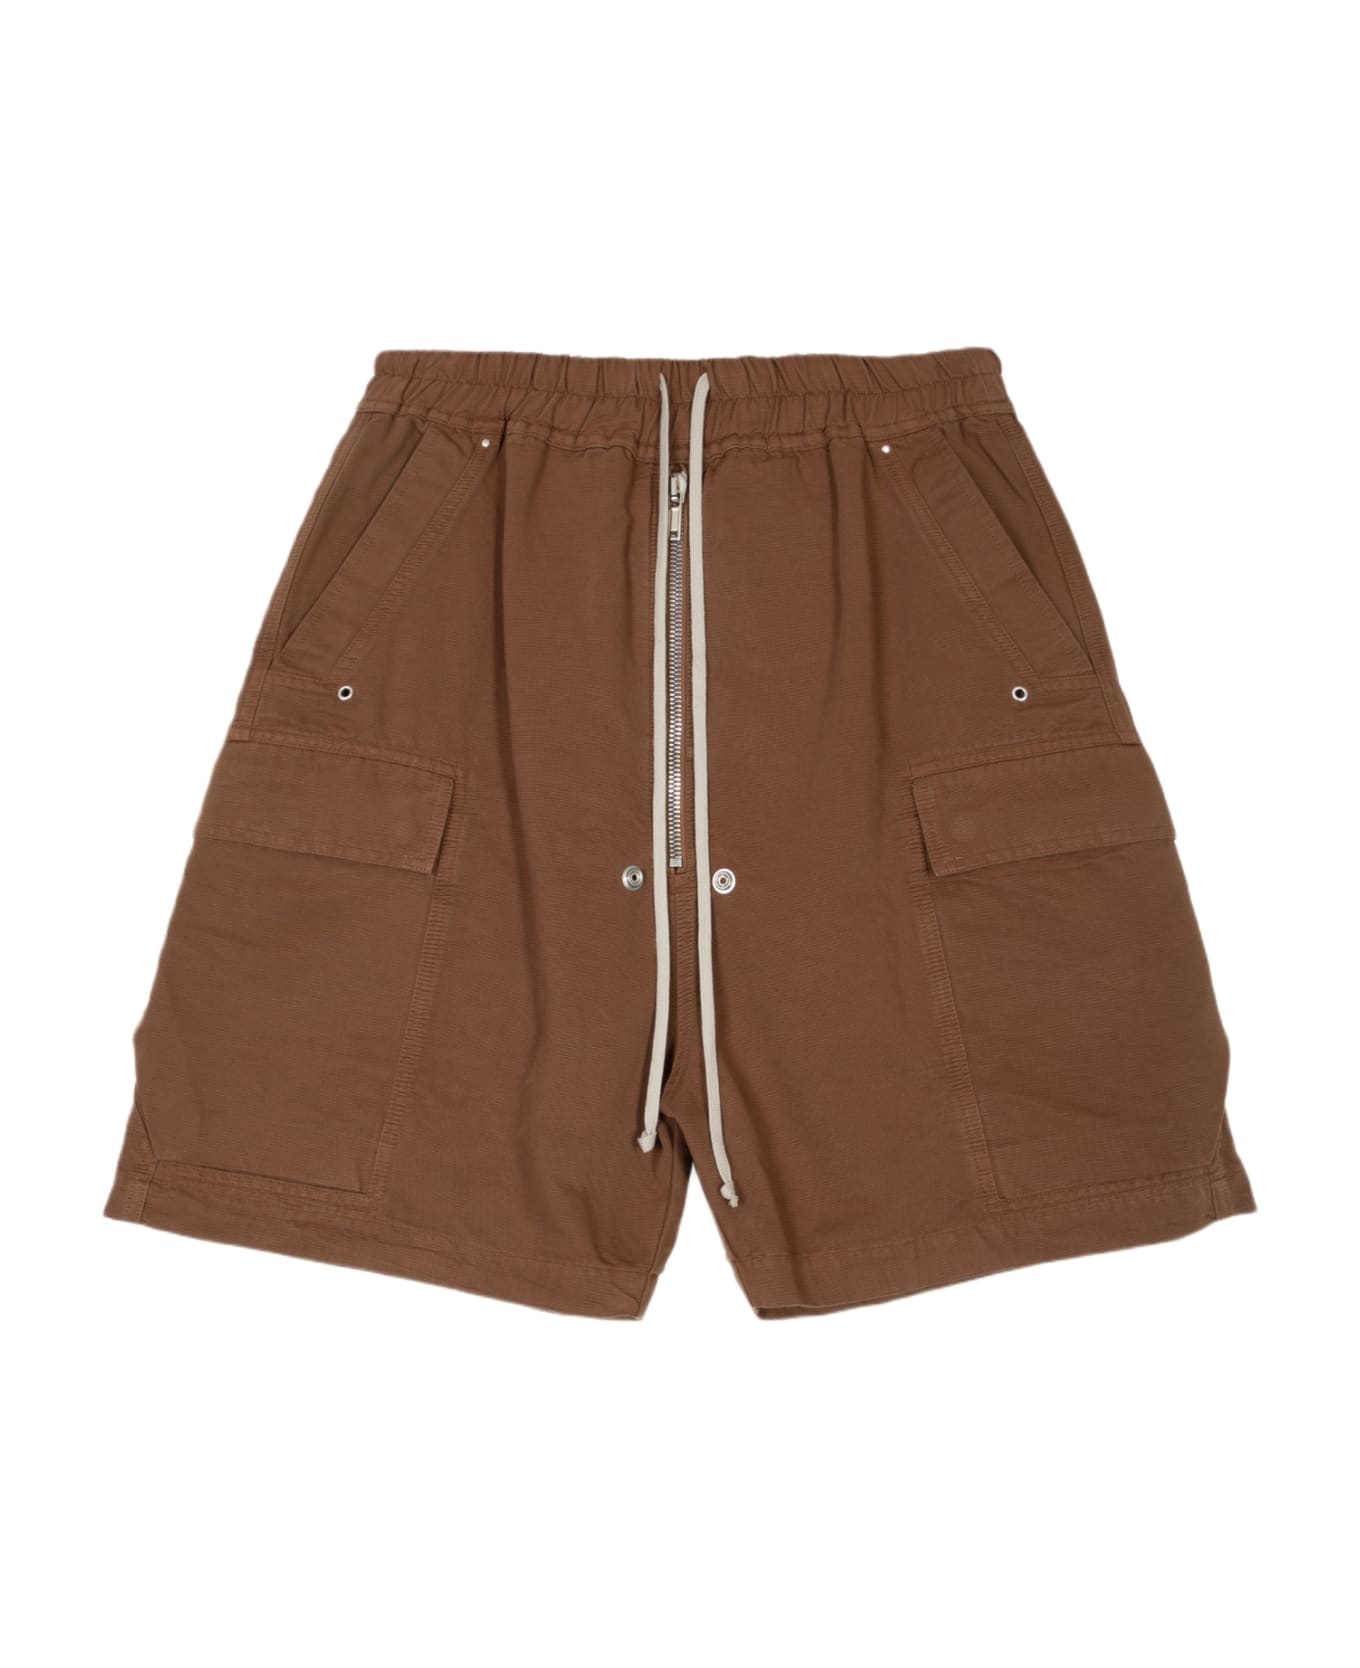 DRKSHDW Cargobela Shorts Brown cotton baggy cargo shorts - Cargobela Shorts - Cachi ショートパンツ